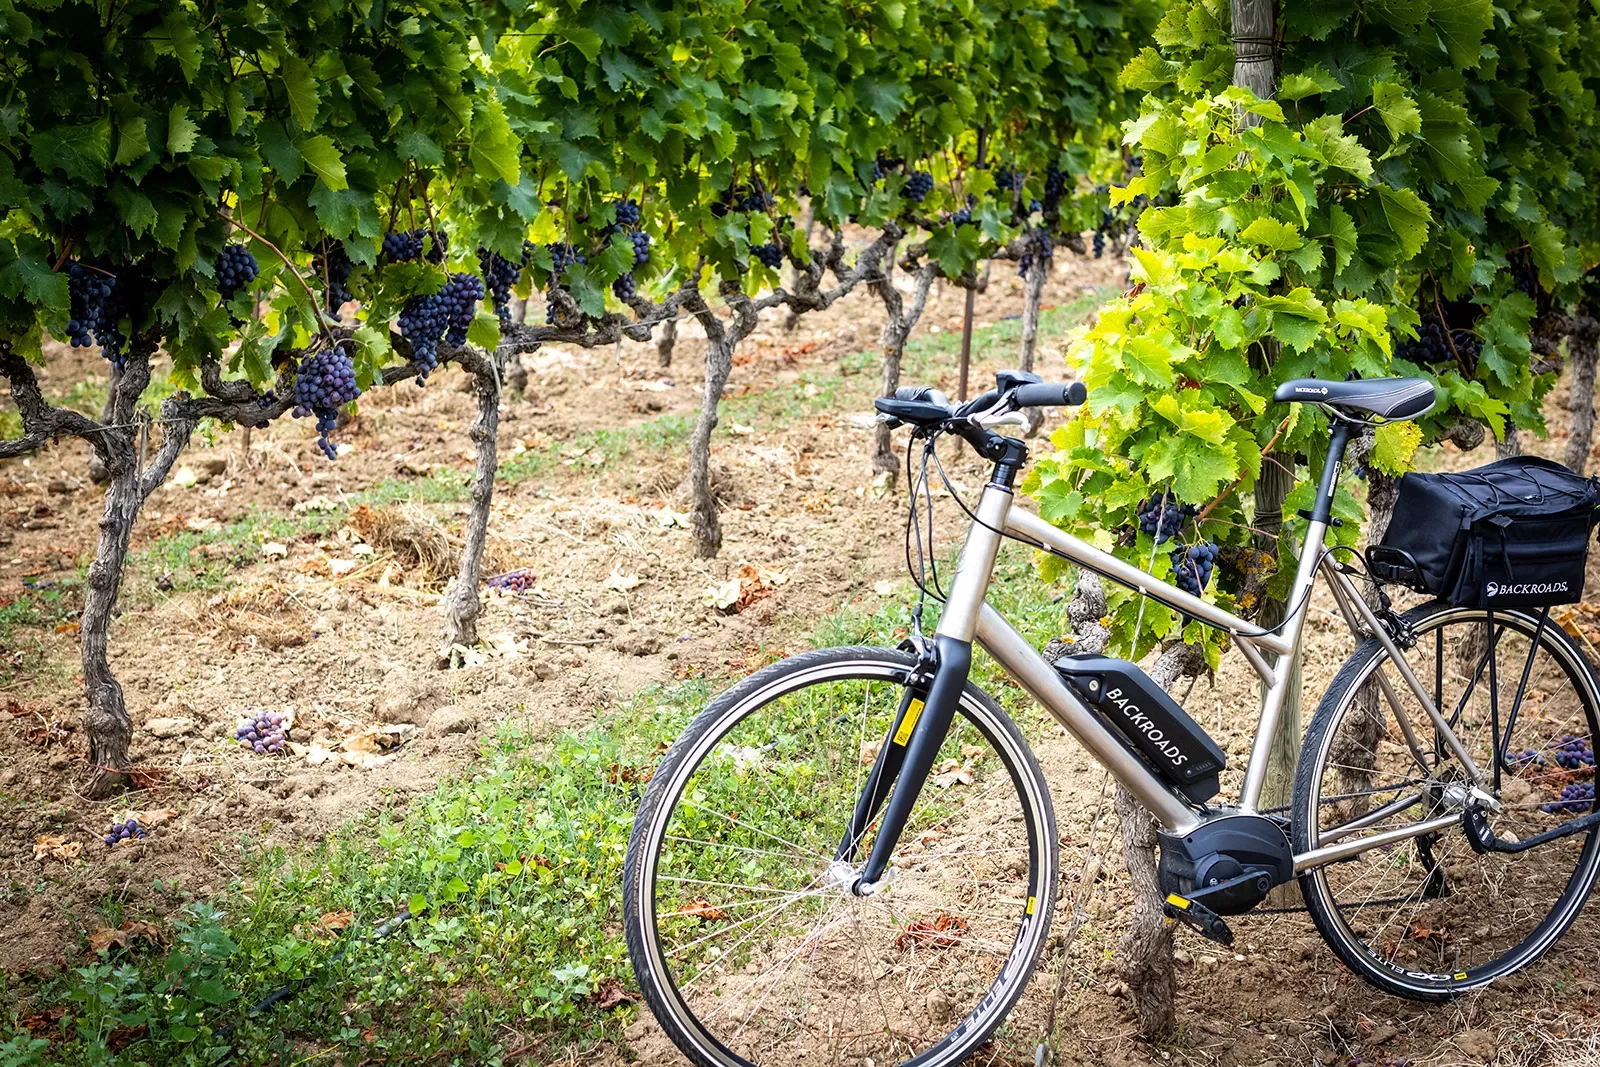 Backroads Bike with Grape Vines